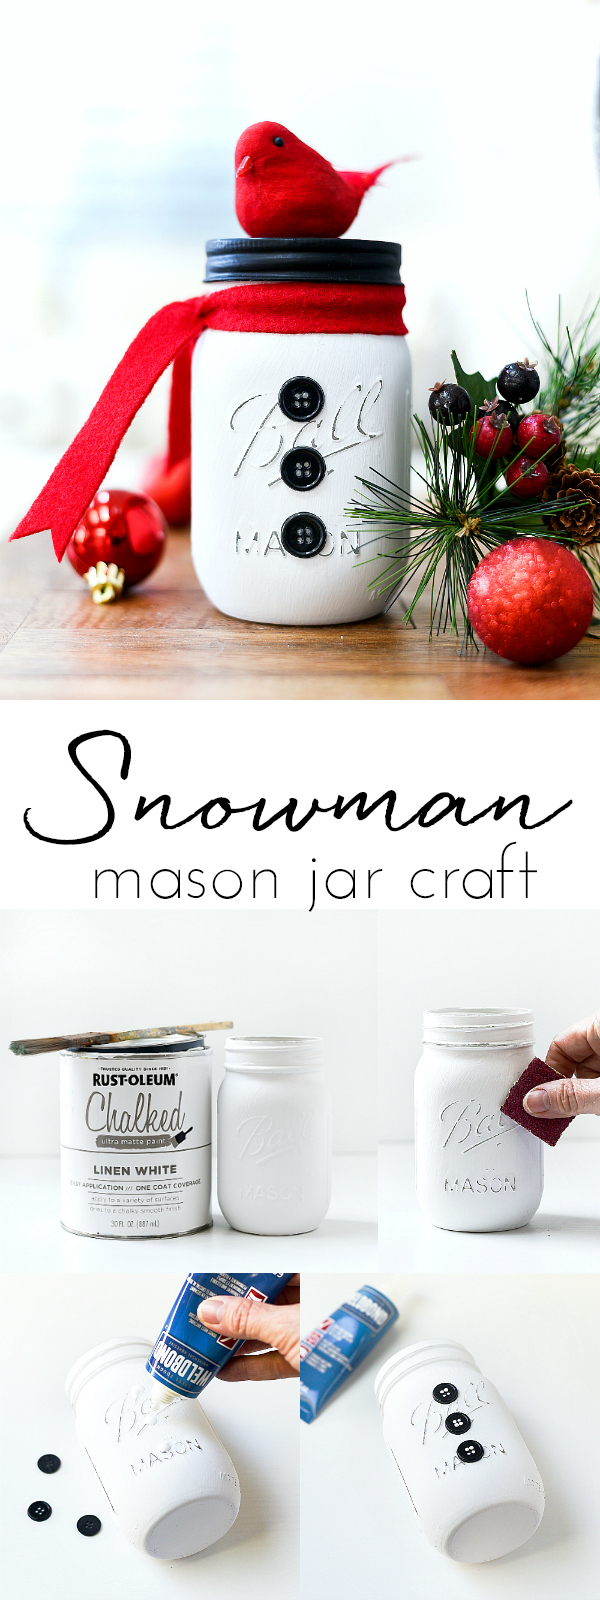 Snowman Mason Jar Craft - Winter Craft Ideas with Mason Jars